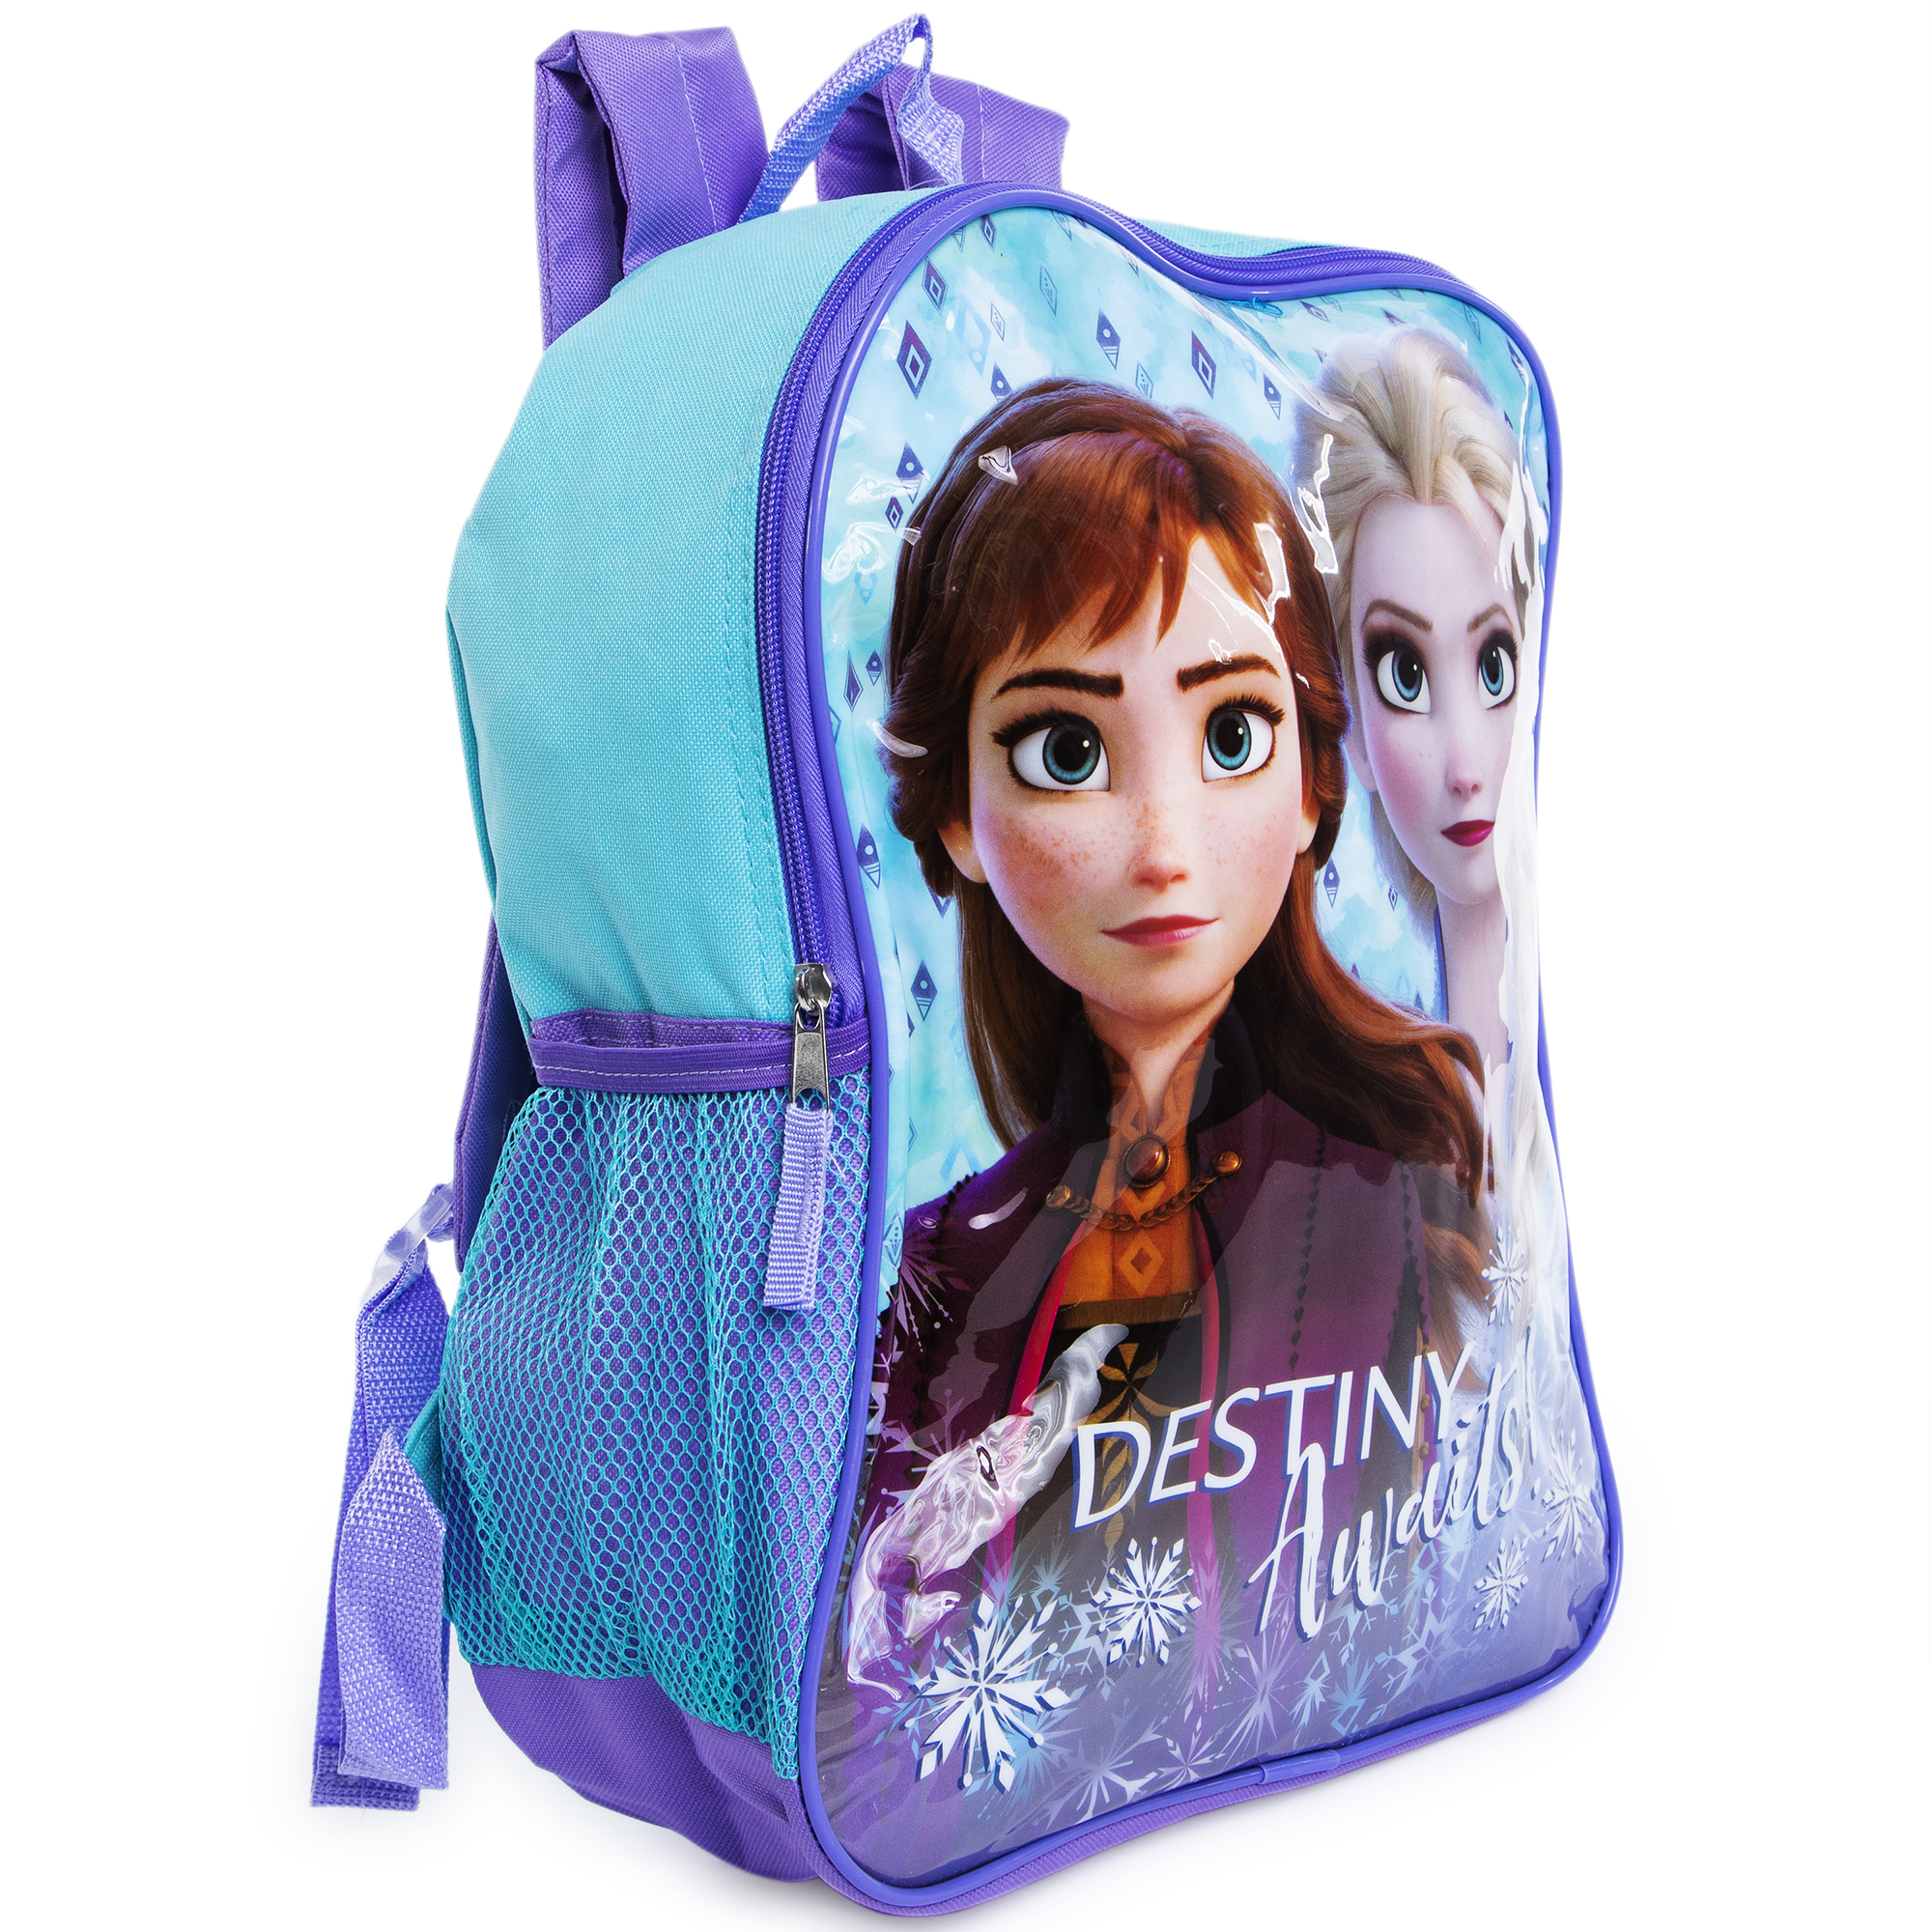 Disney Frozen 2 Anna and Elsa backpack